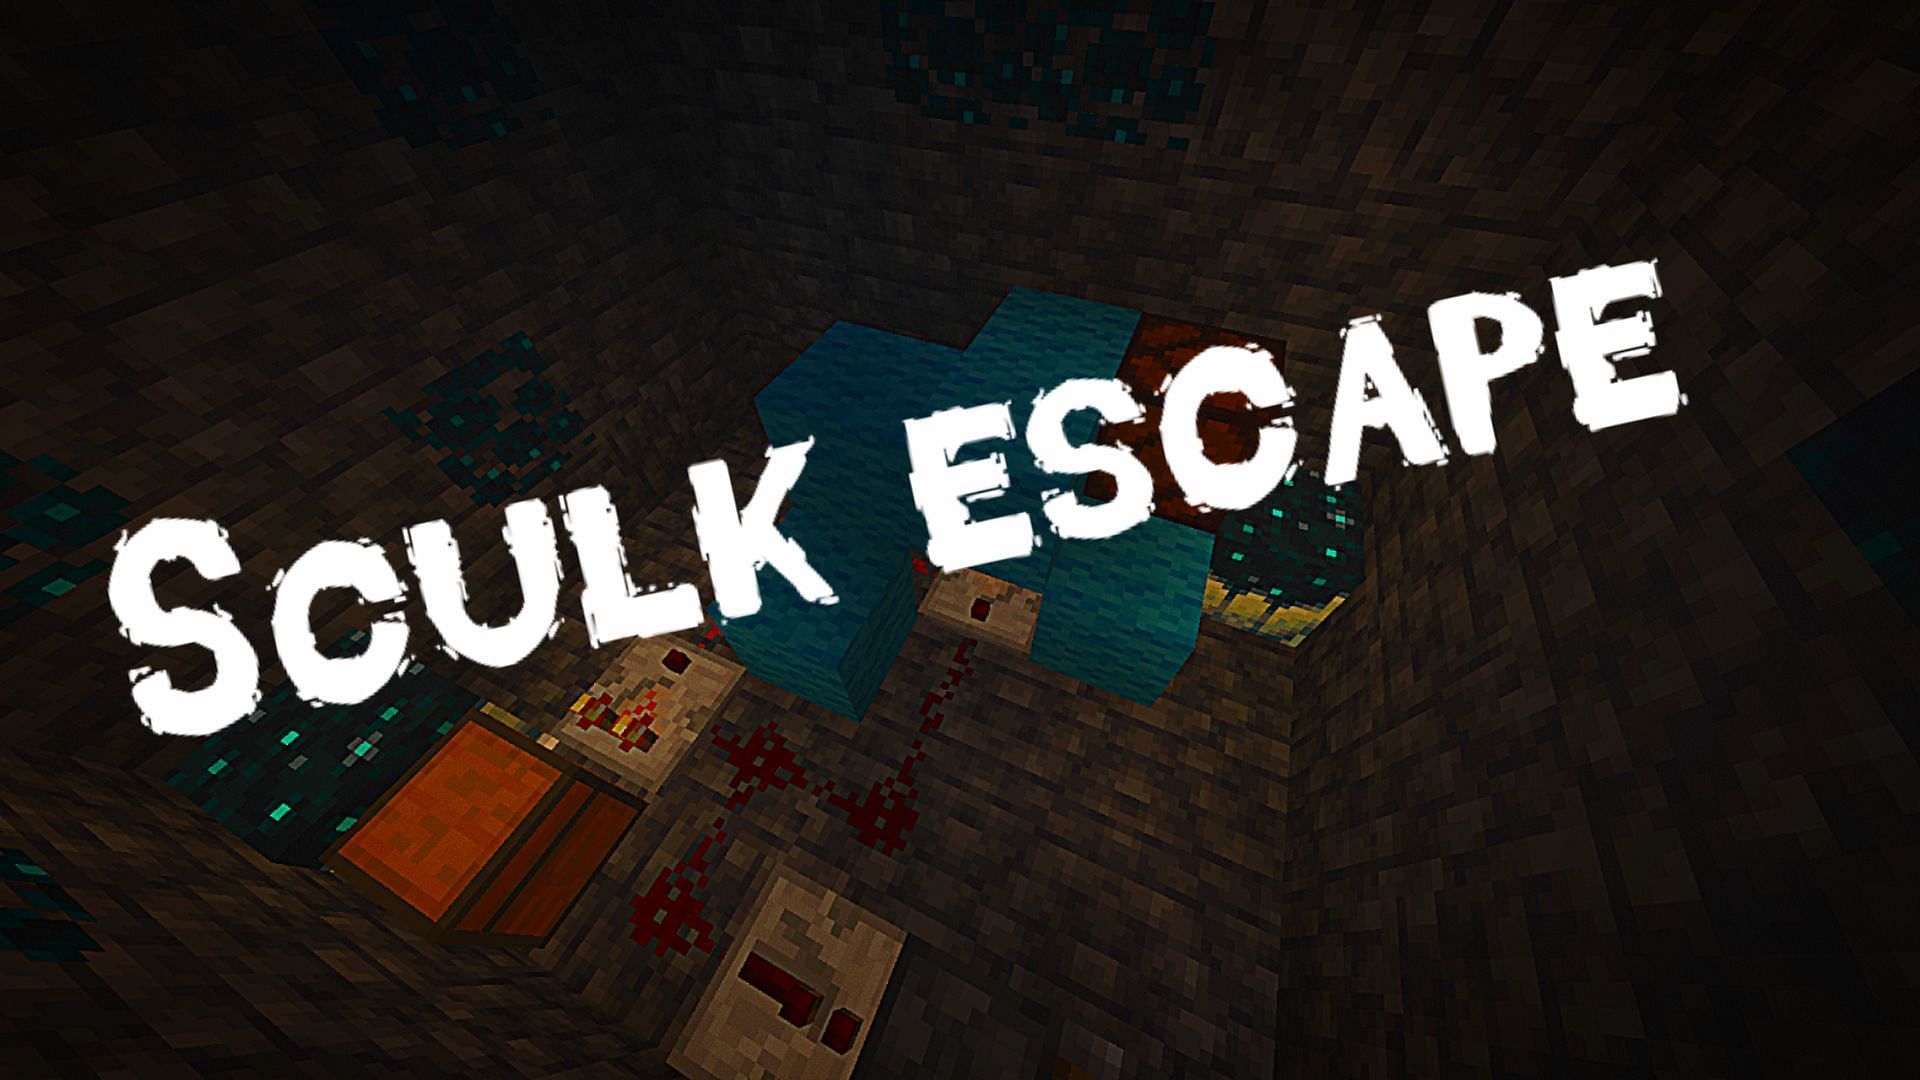 Minecraft Prison Escape Puzzle Game Maps Minecraft Bedrock